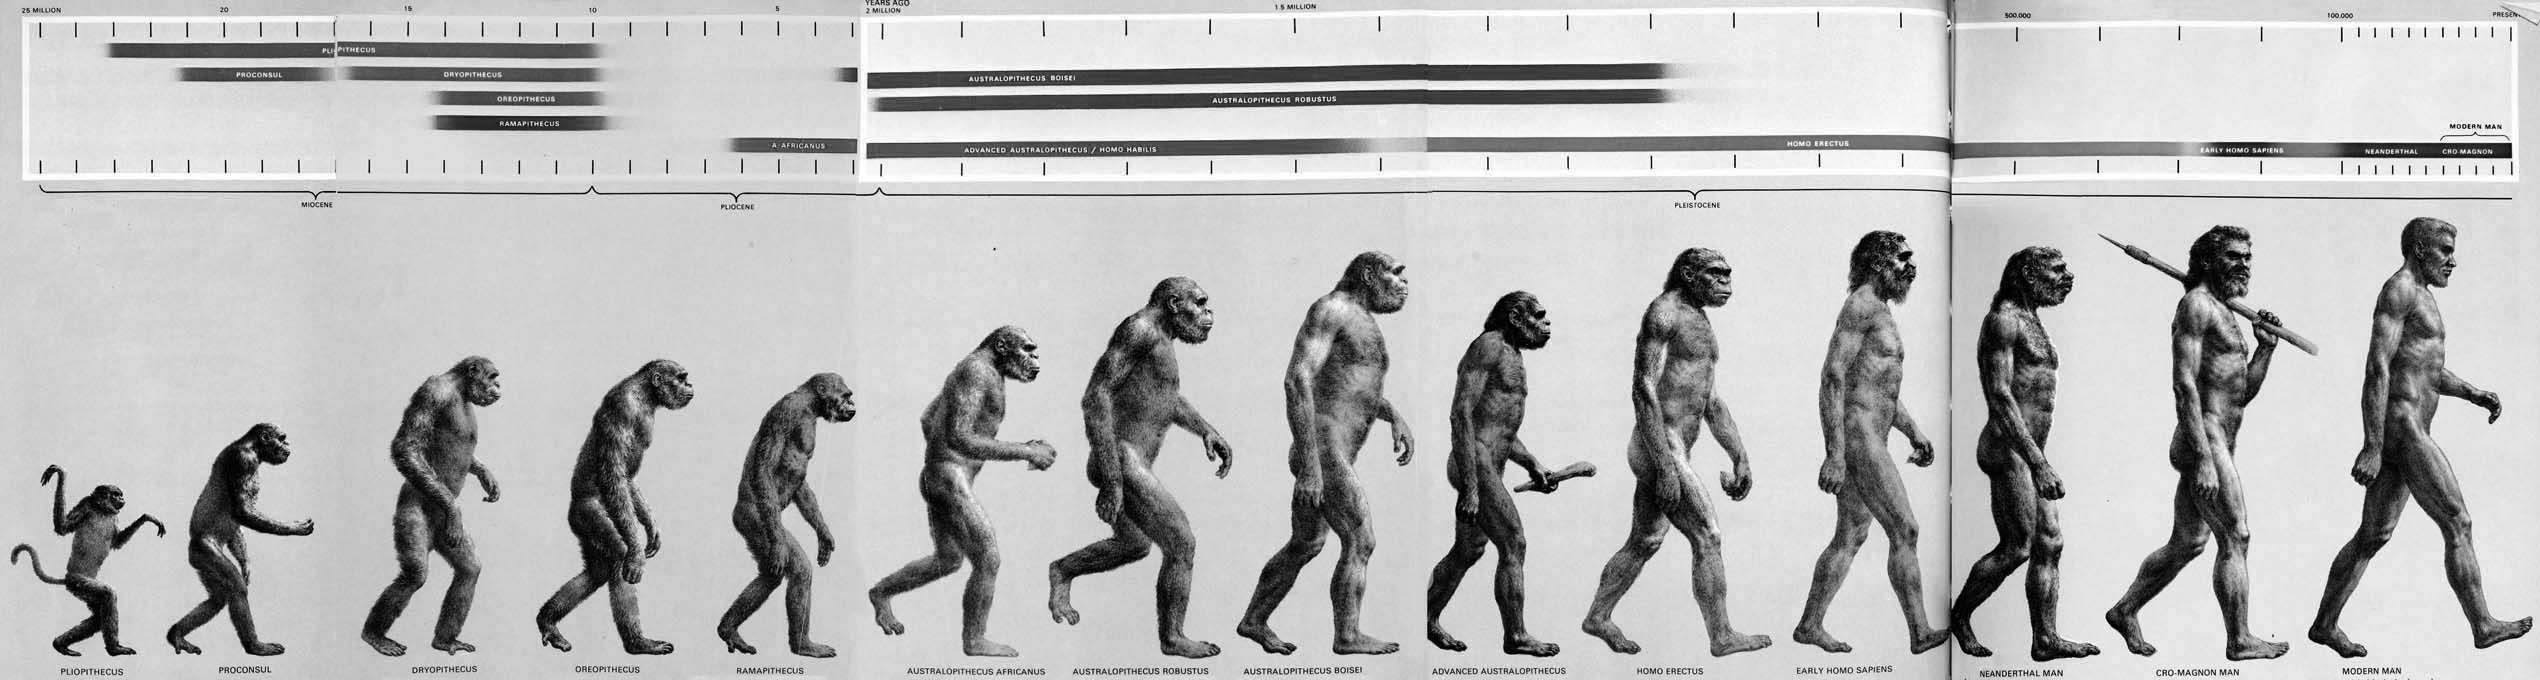 Evolution illustration